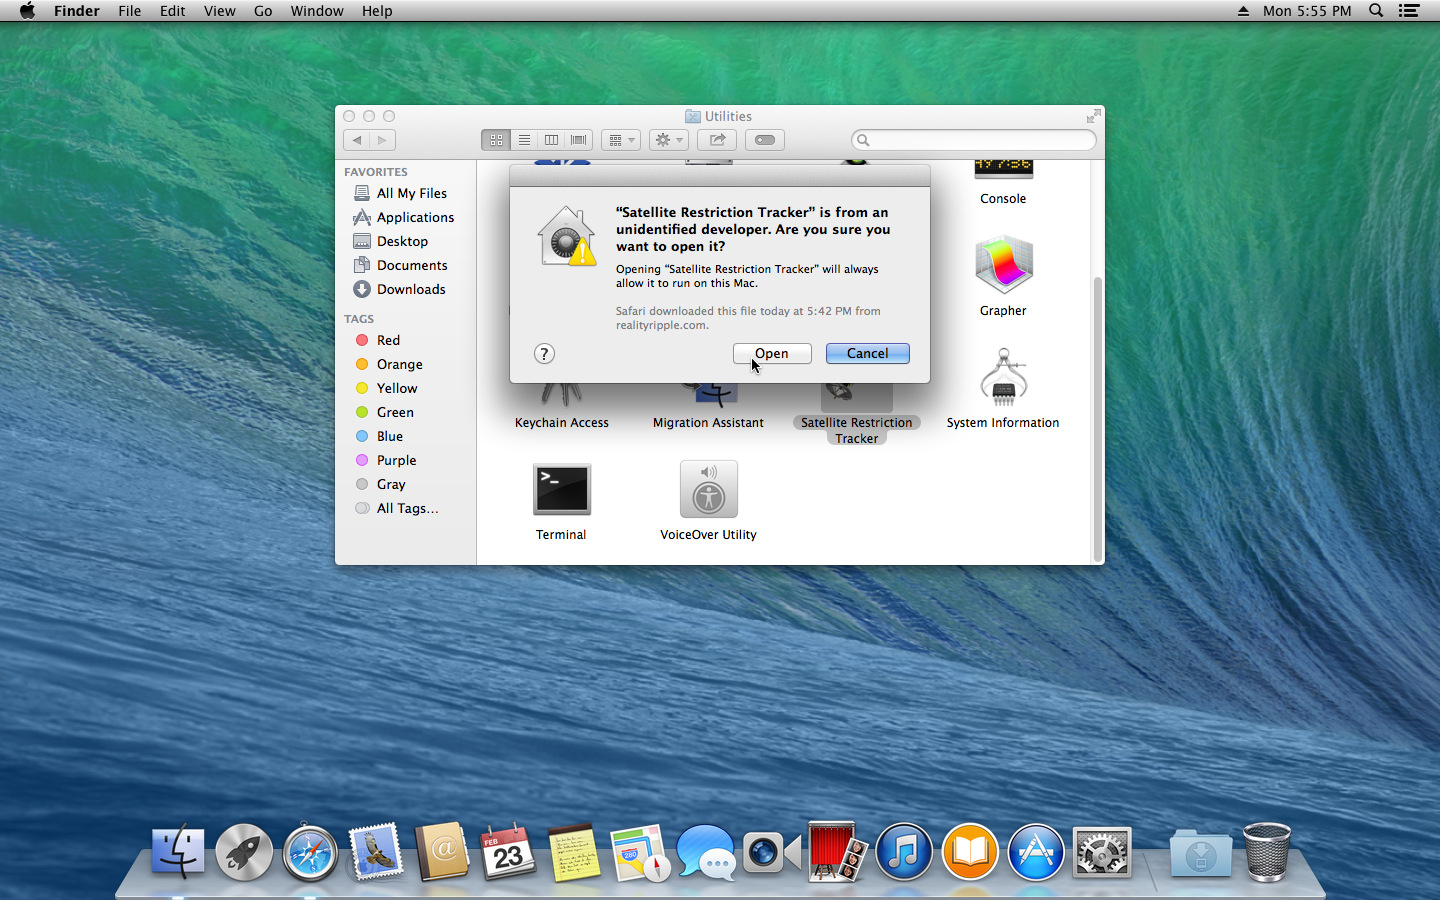 macOS 10.9
🍎